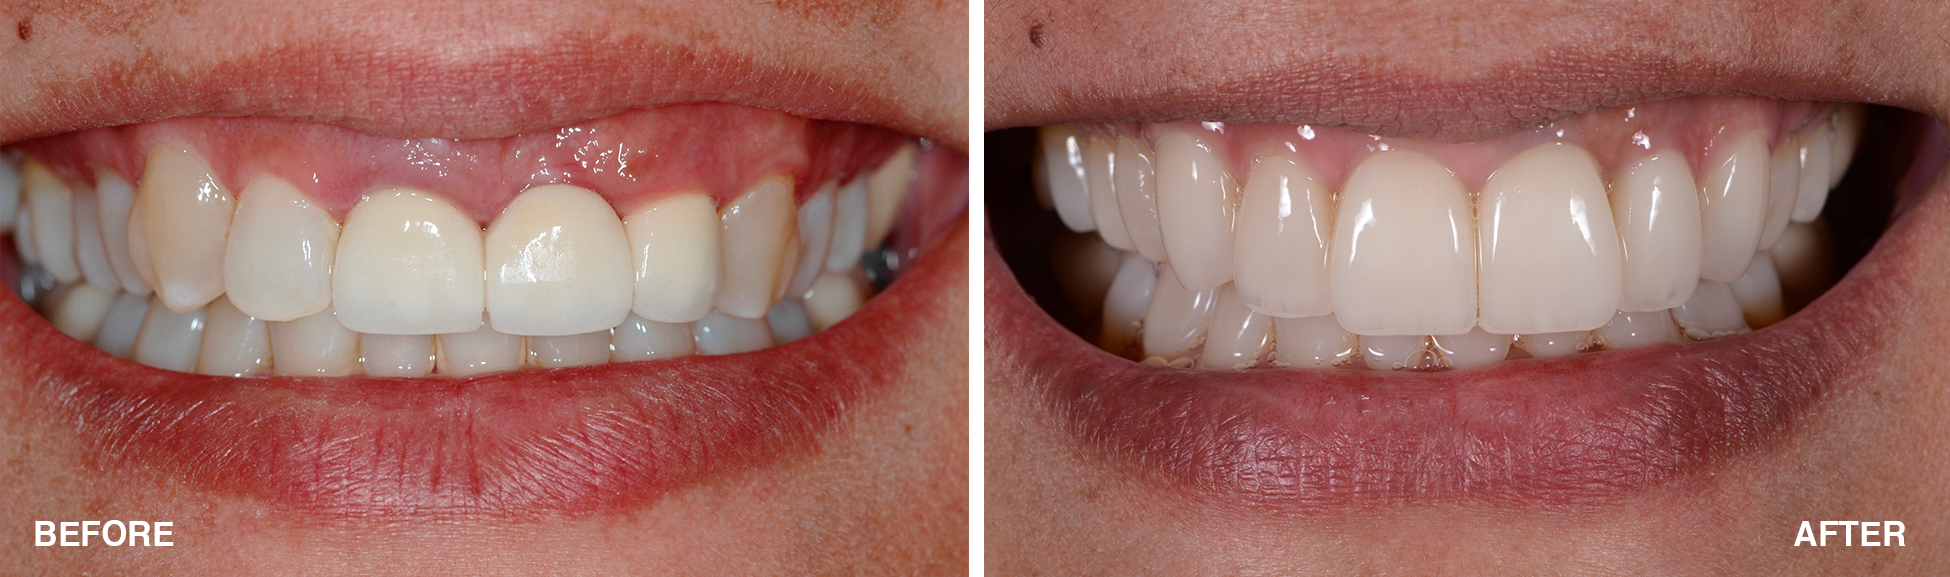 Teeth whitening procedure video